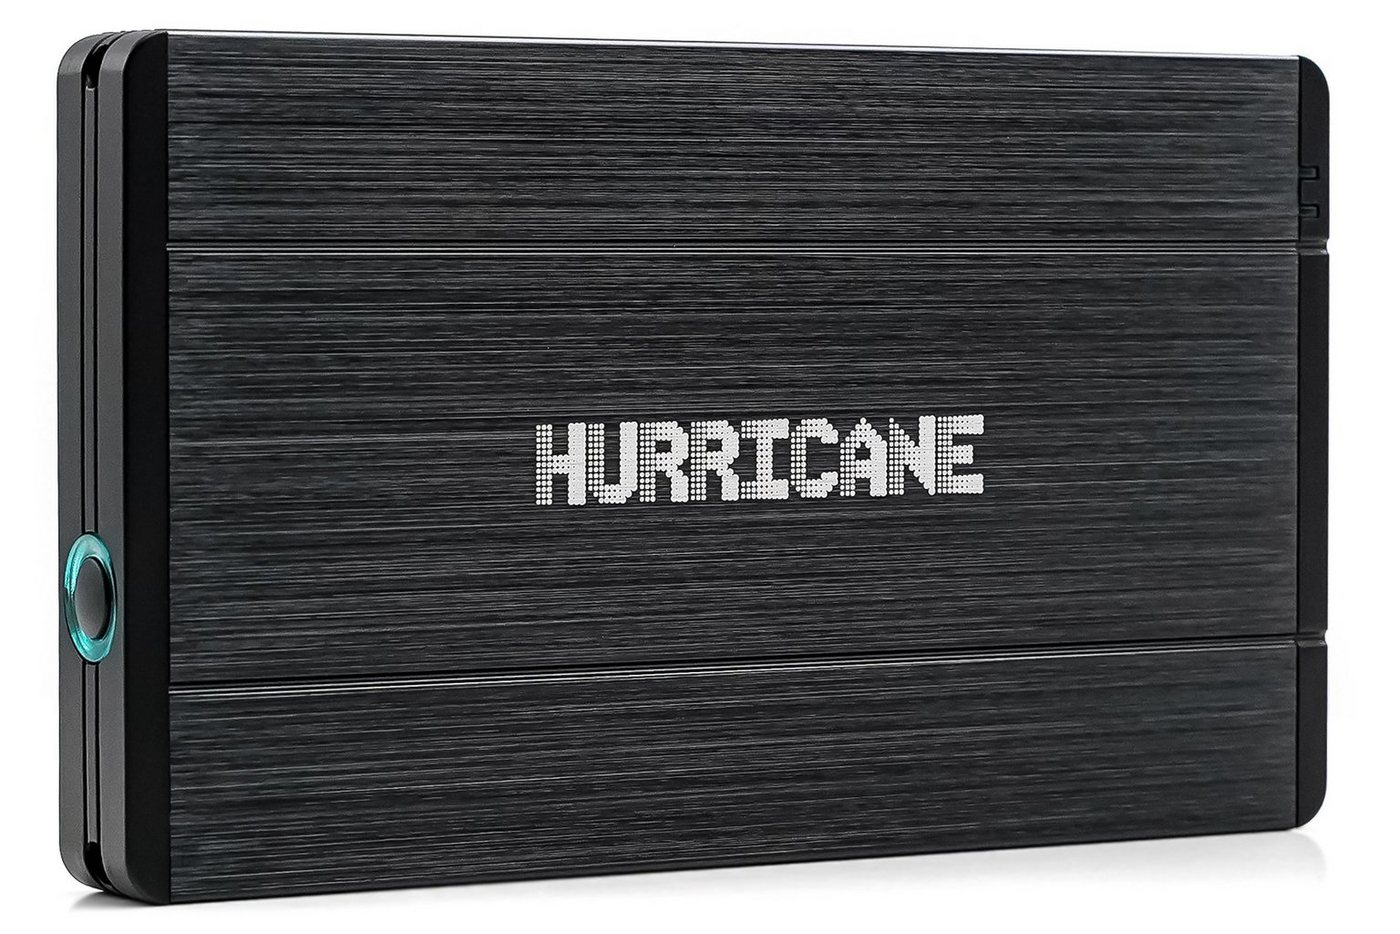 HURRICANE Hurricane 12.5mm GD25650 400GB 2.5 USB 3.0 Externe Aluminium Festpla externe HDD-Festplatte" von HURRICANE